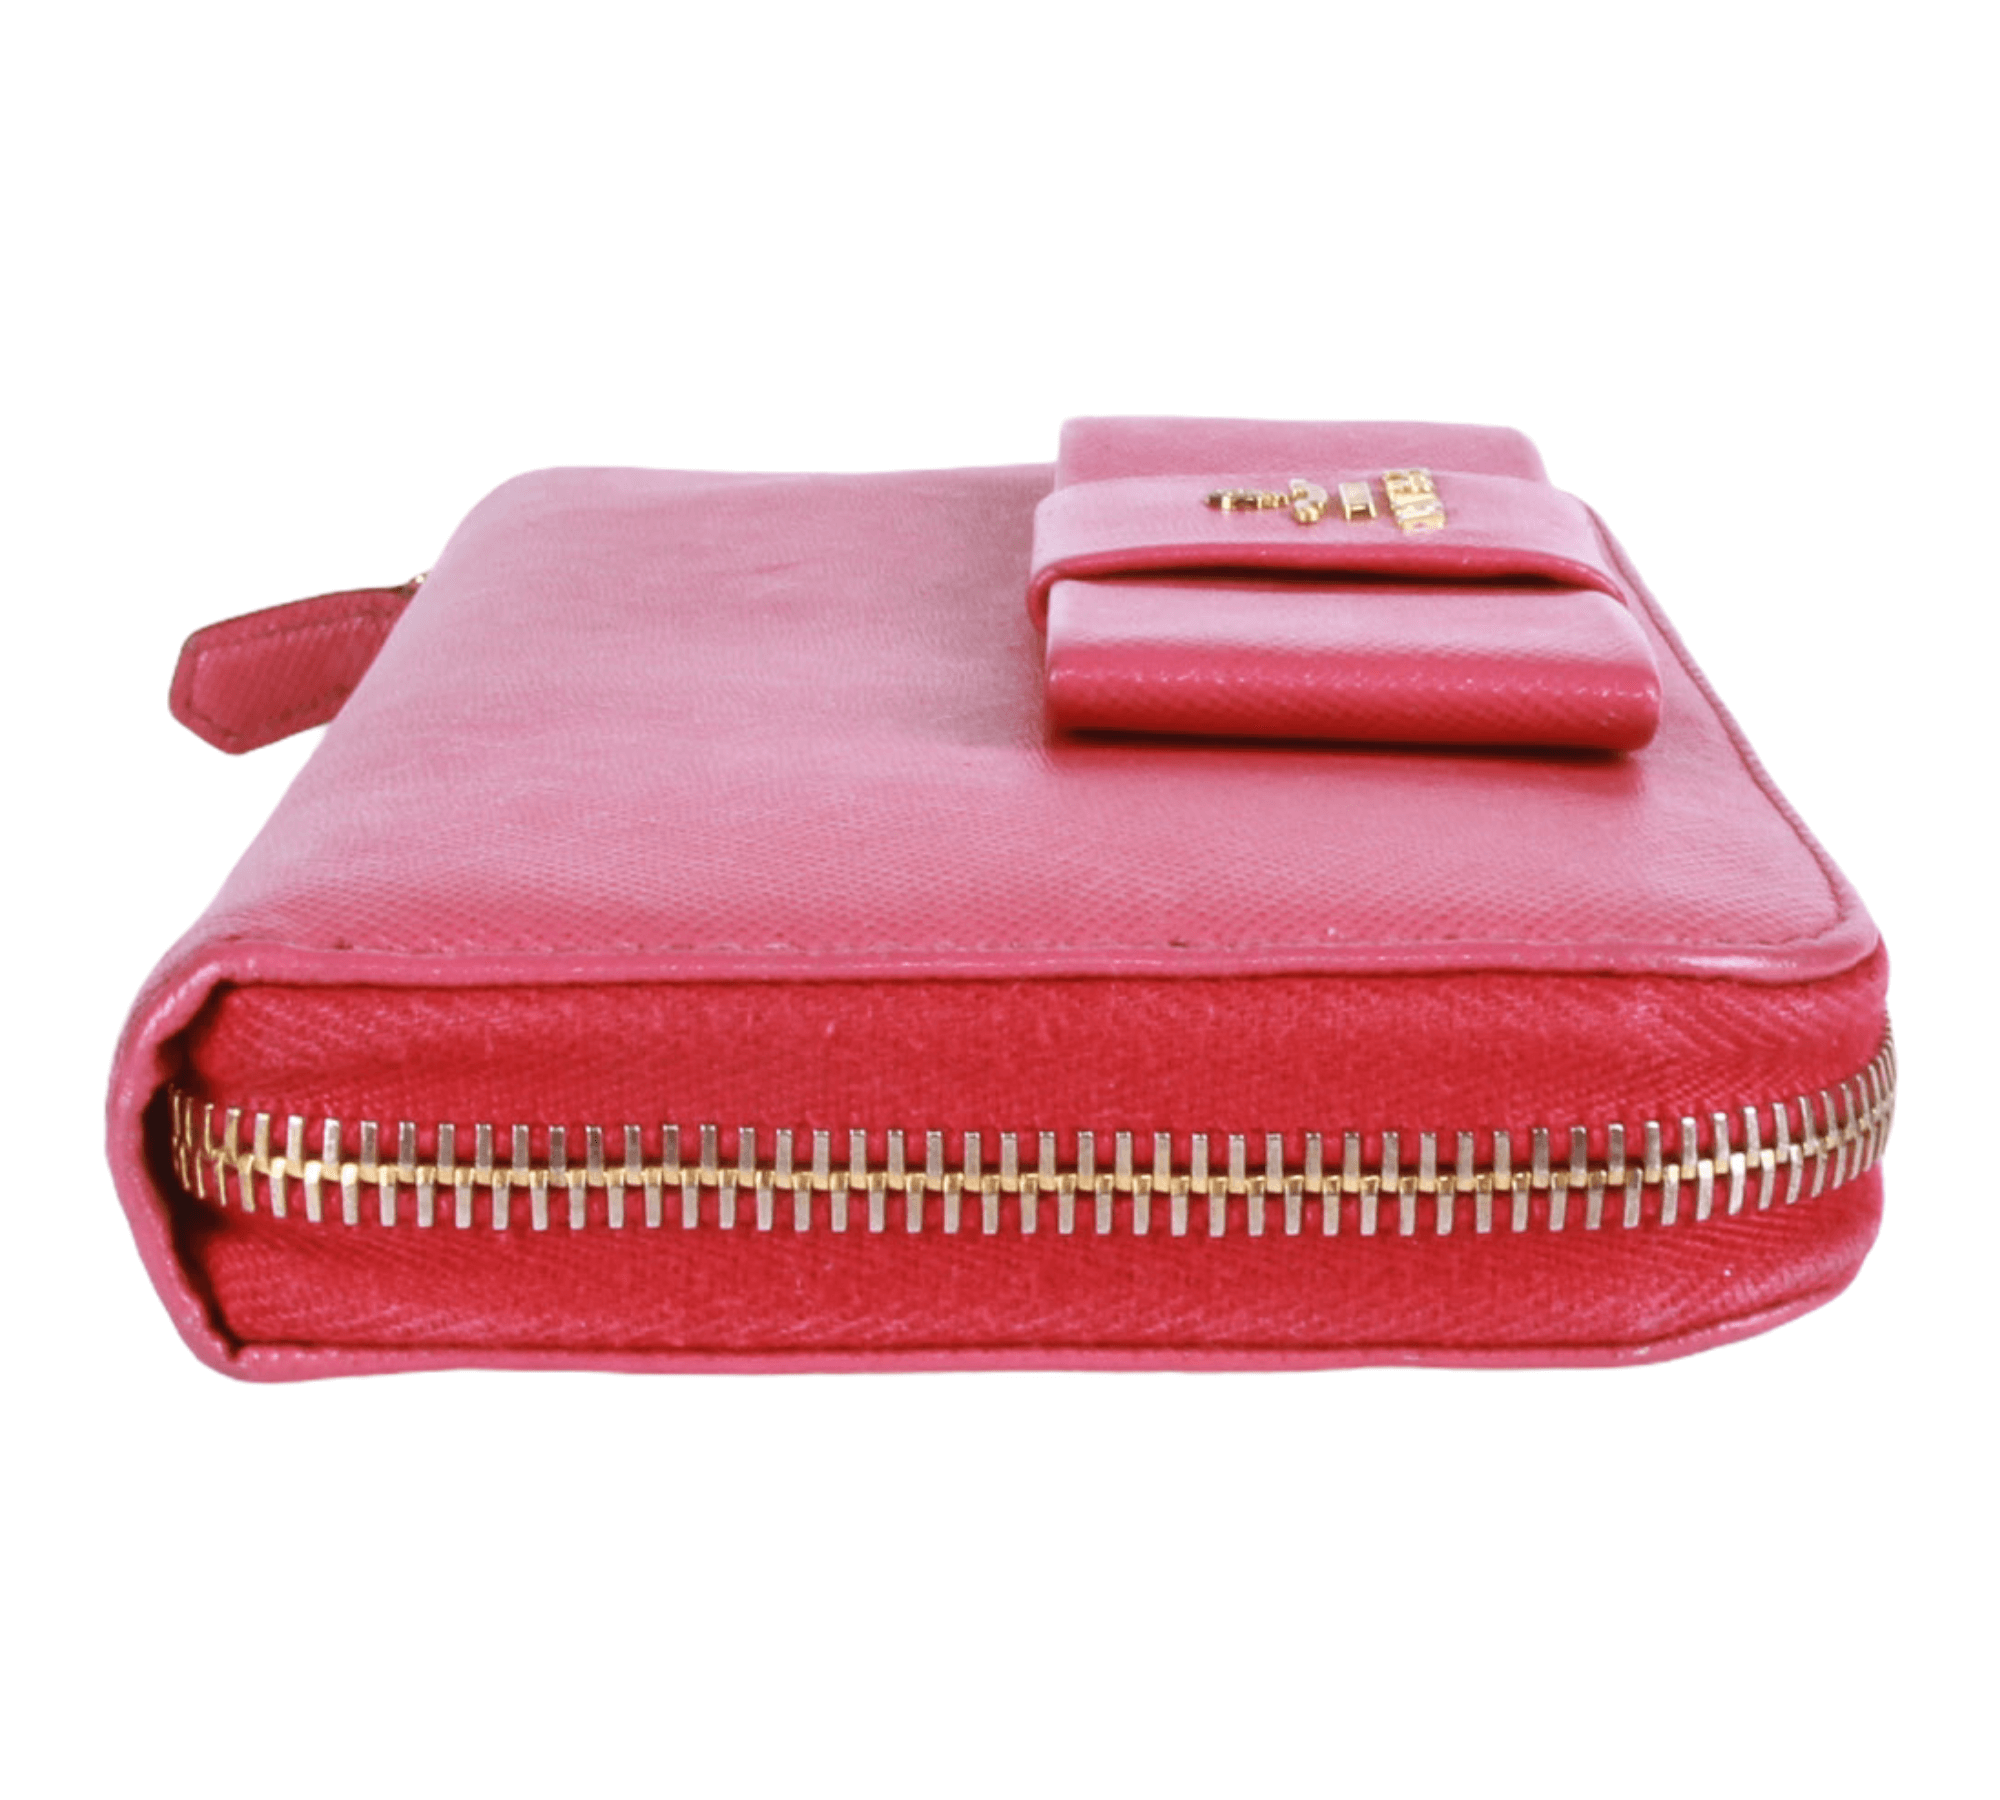 Pink Prada Fiocco Bow Saffiano Lux Long Wallet